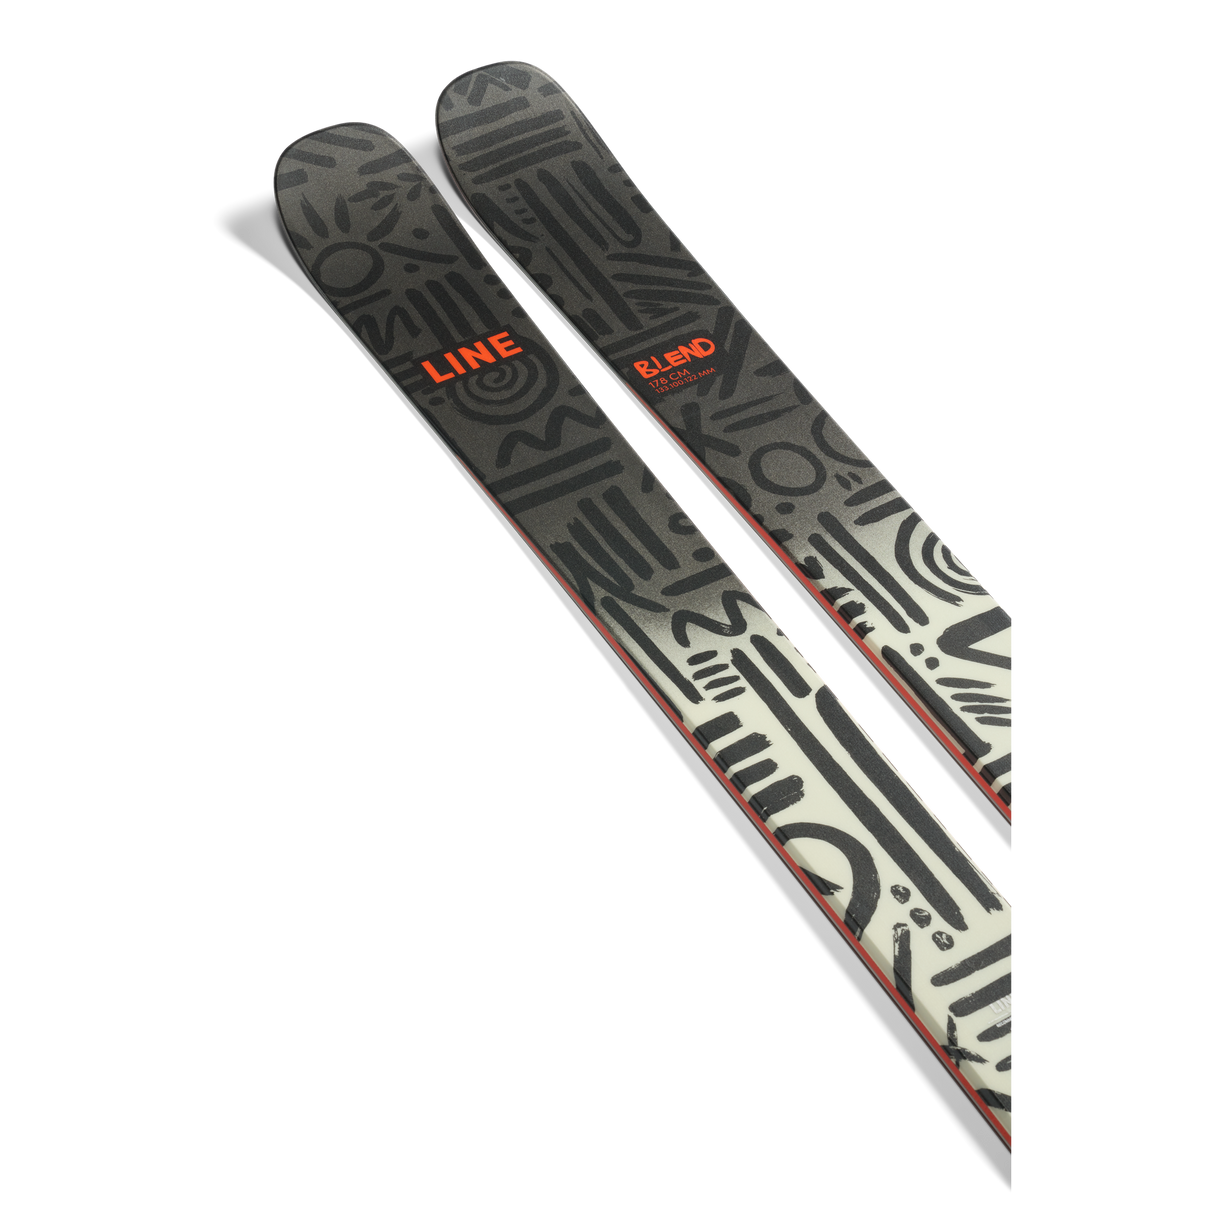 Line 2024 Blend Ski